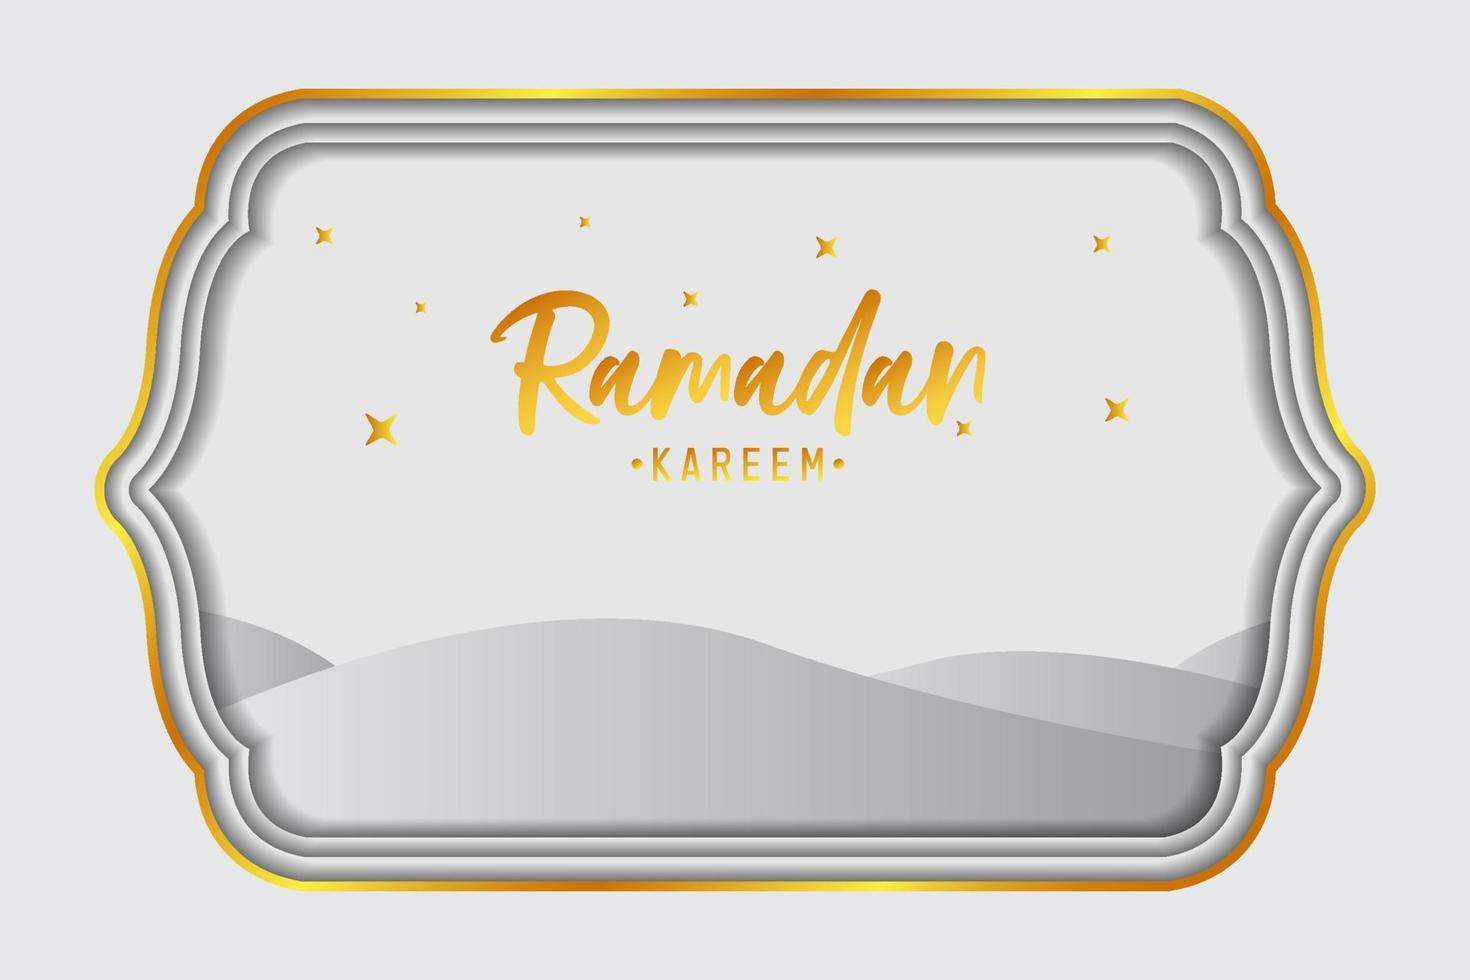 schöner ramadan kareem hintergrund im goldrahmen vektor